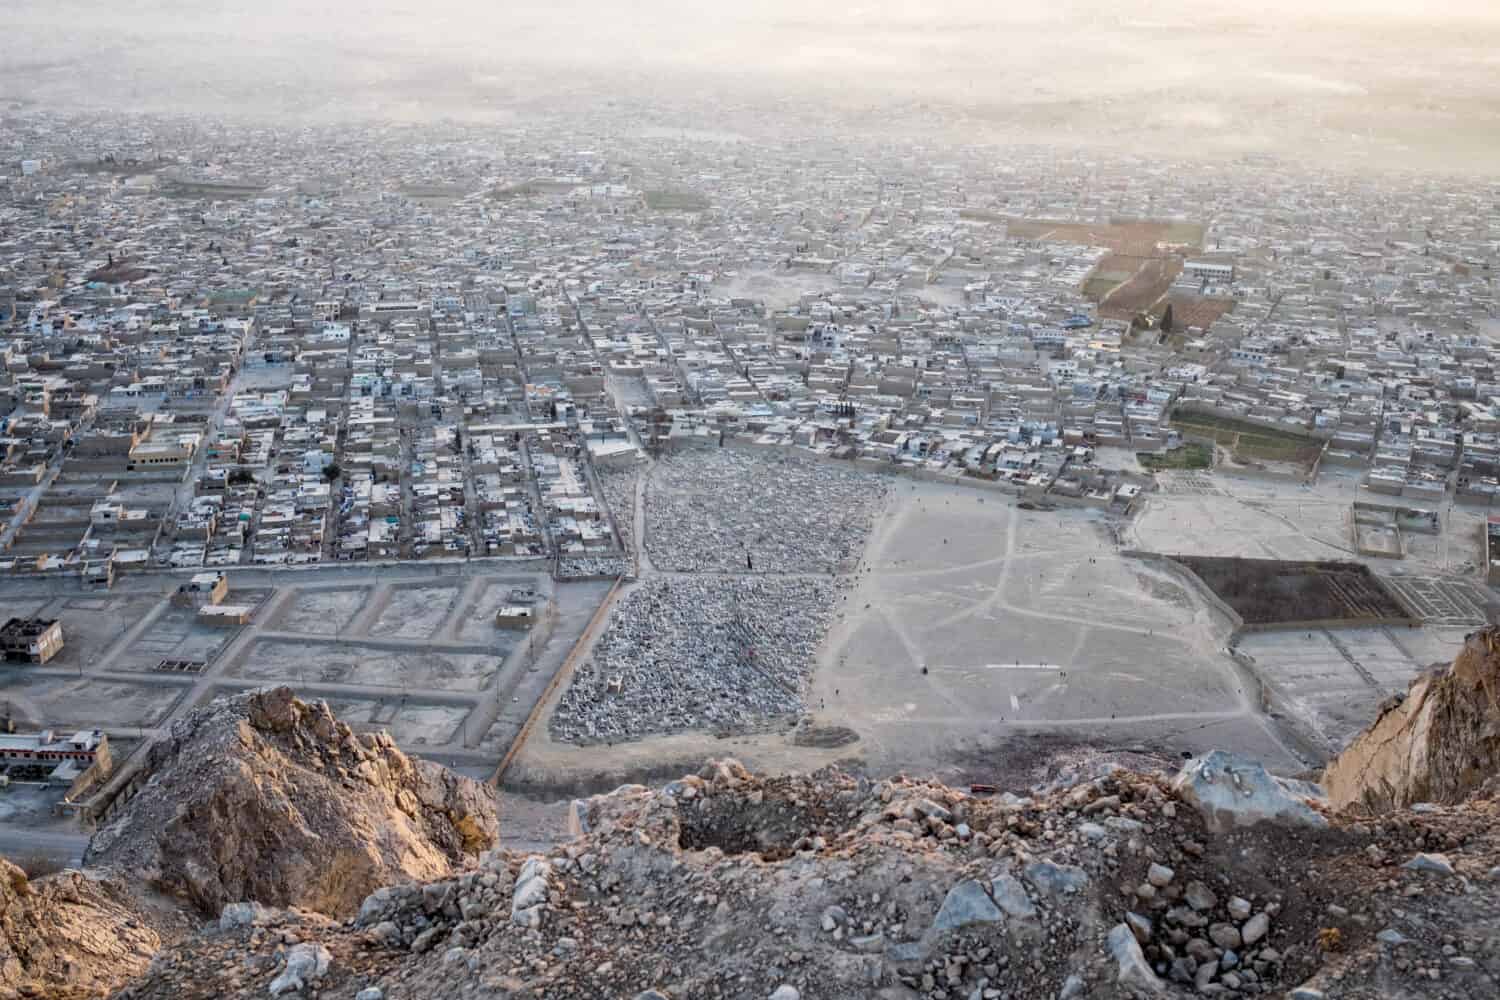 Aerial view of Quetta, Pakistan